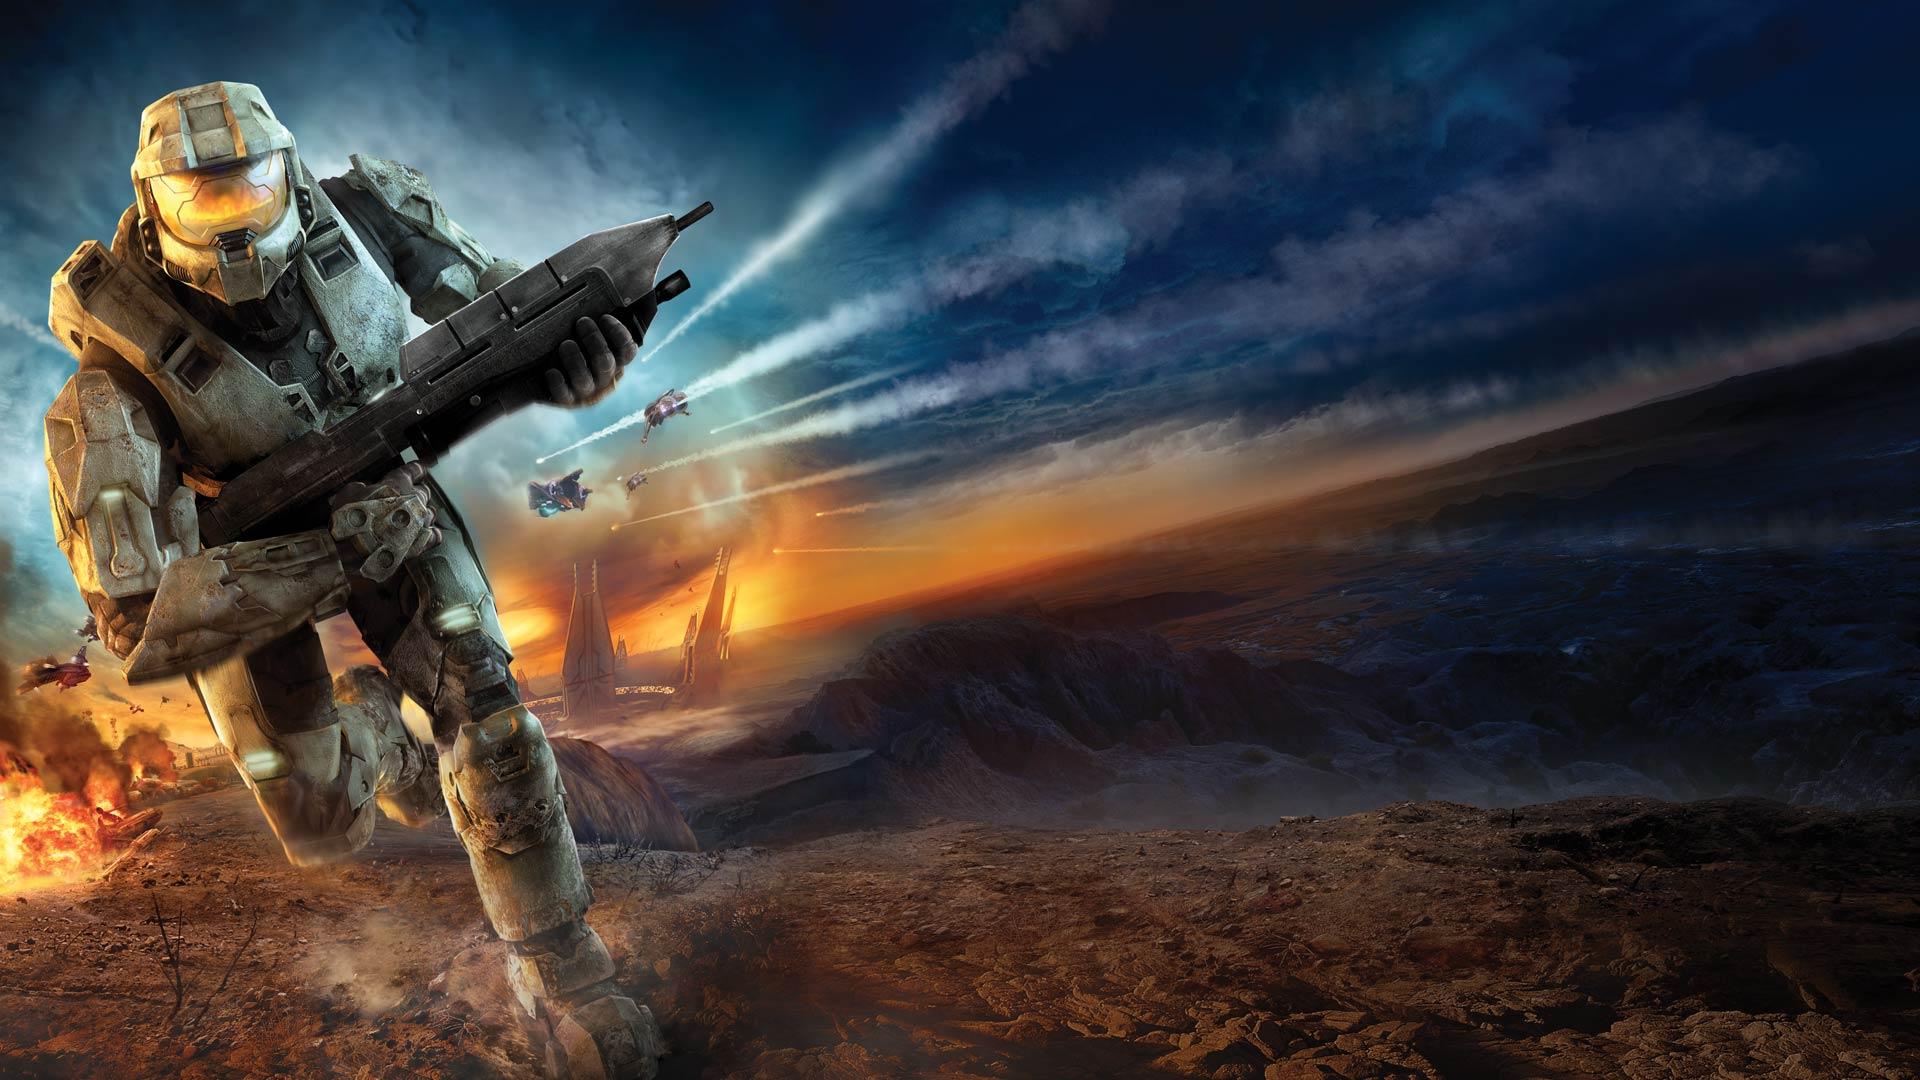 Halo Infinite announced